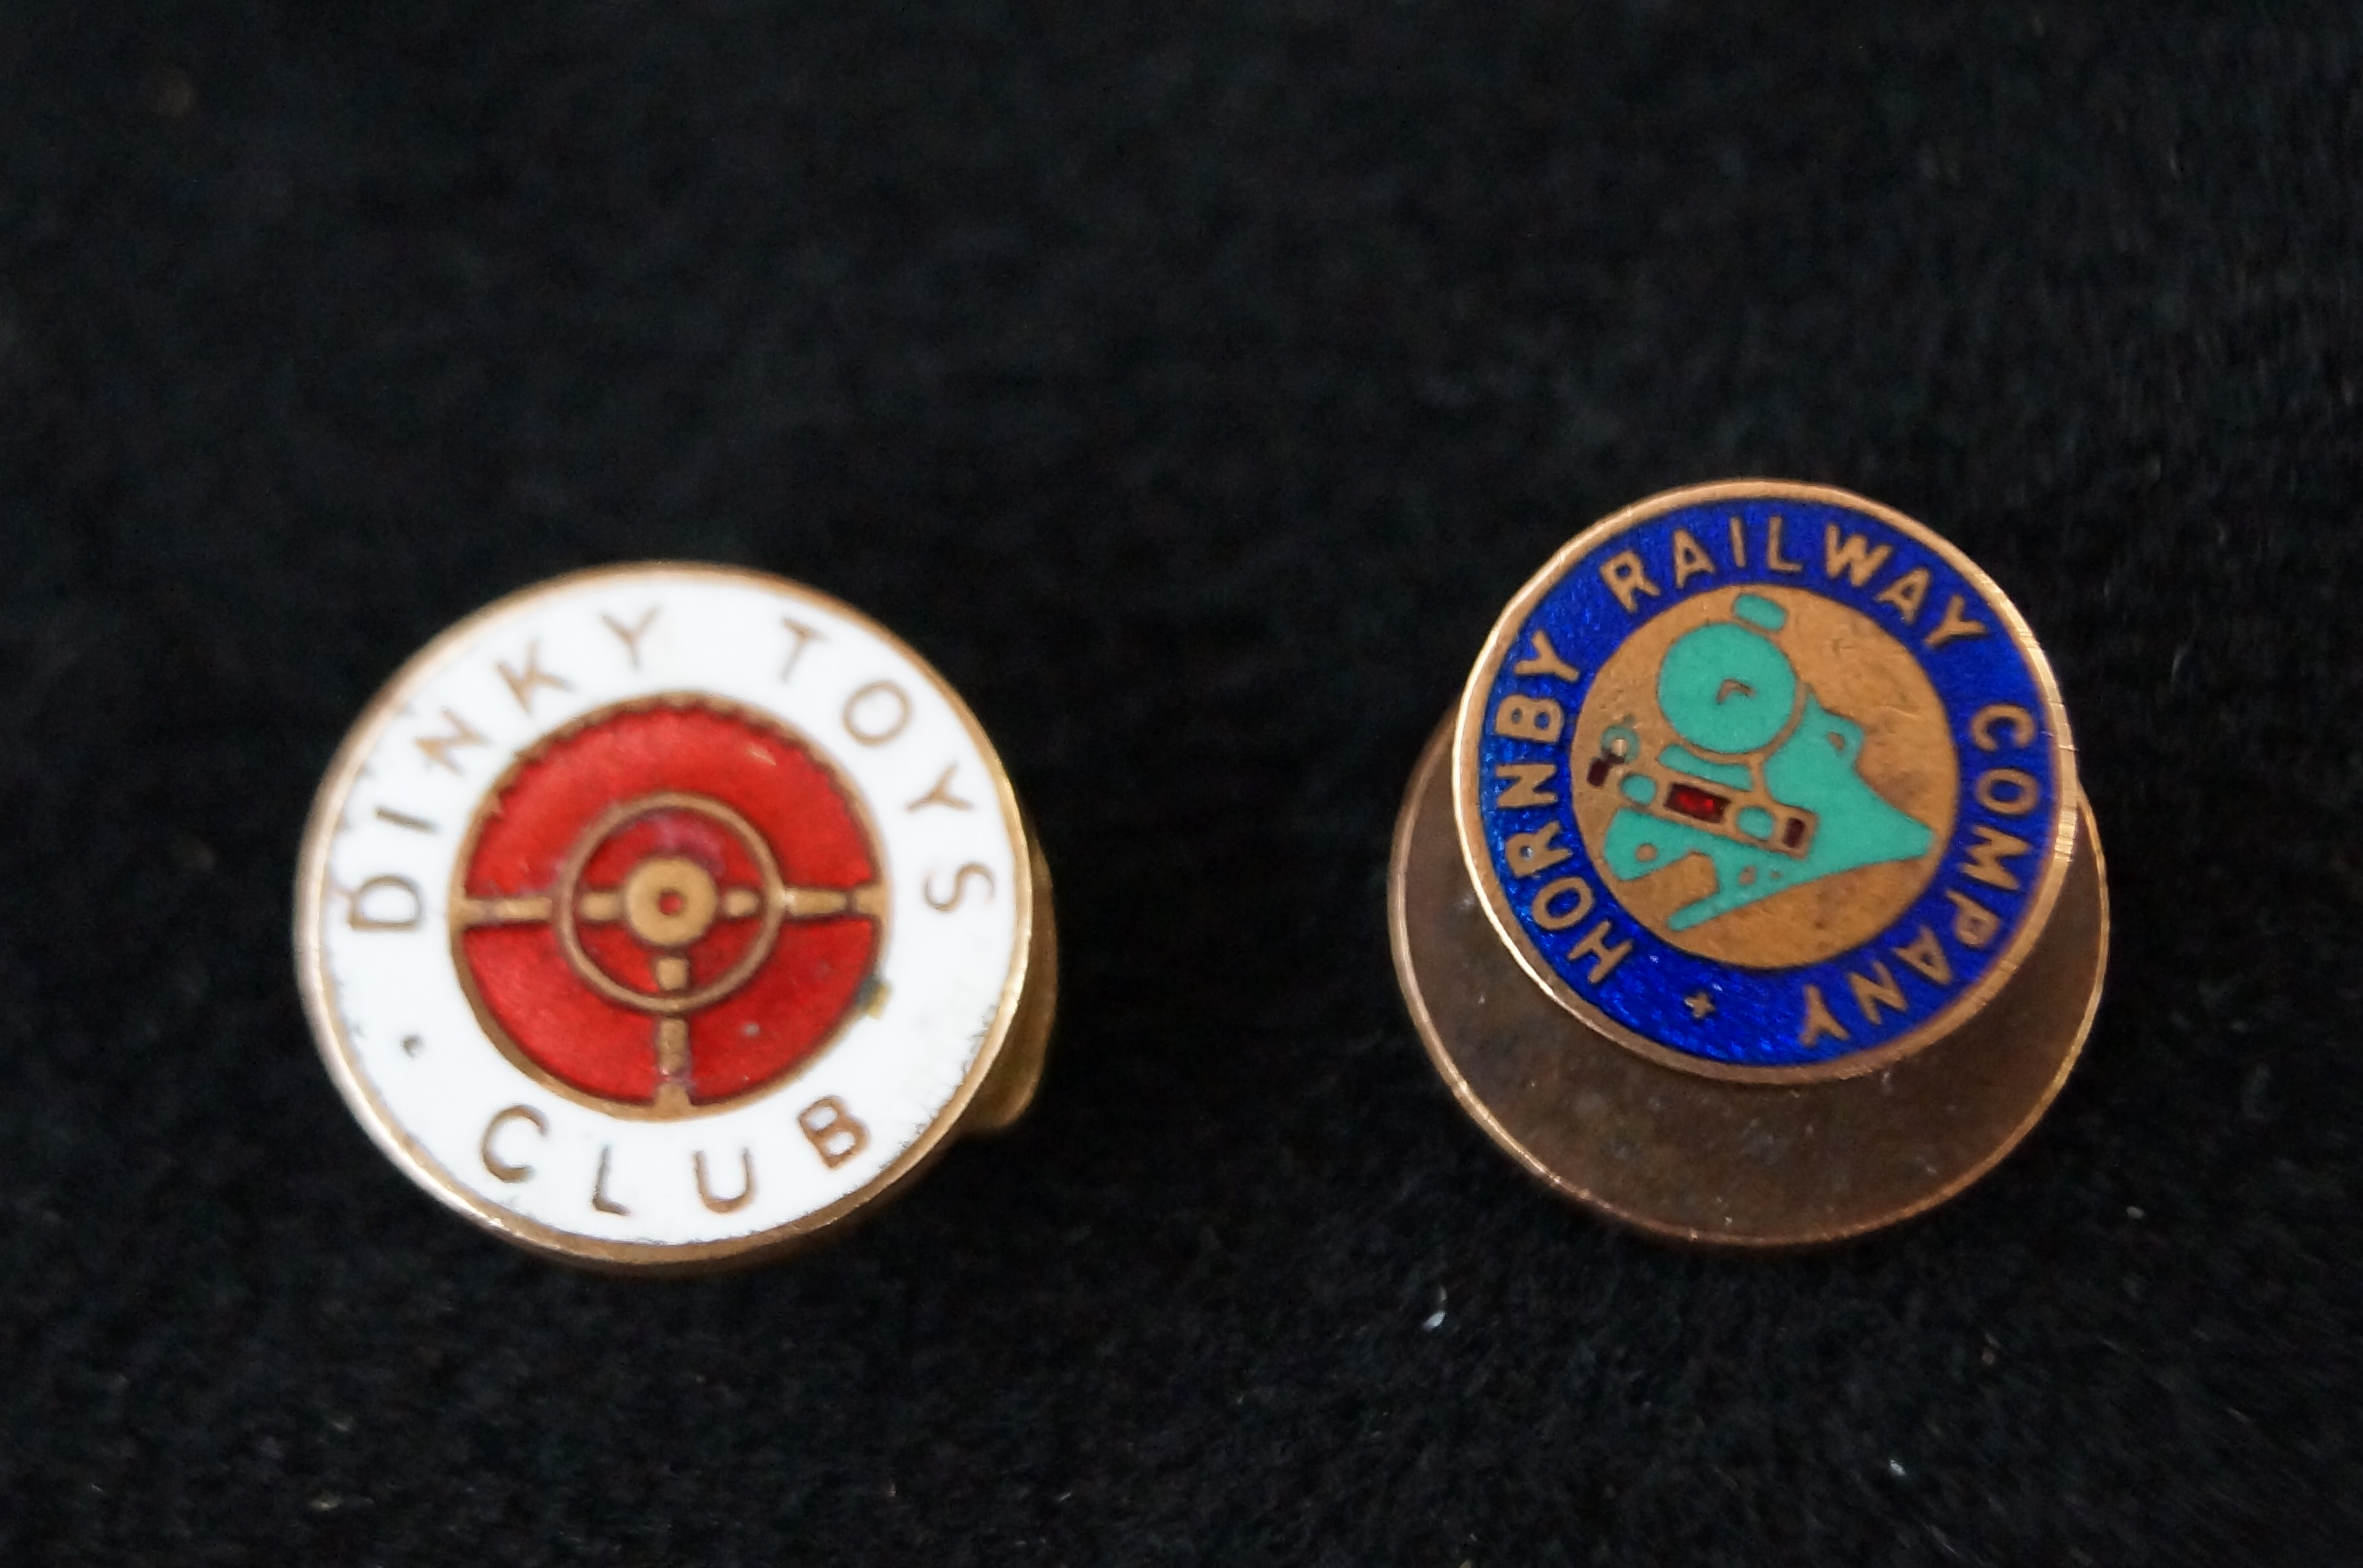 2 Vintage enamel button badges, Hornby railway com